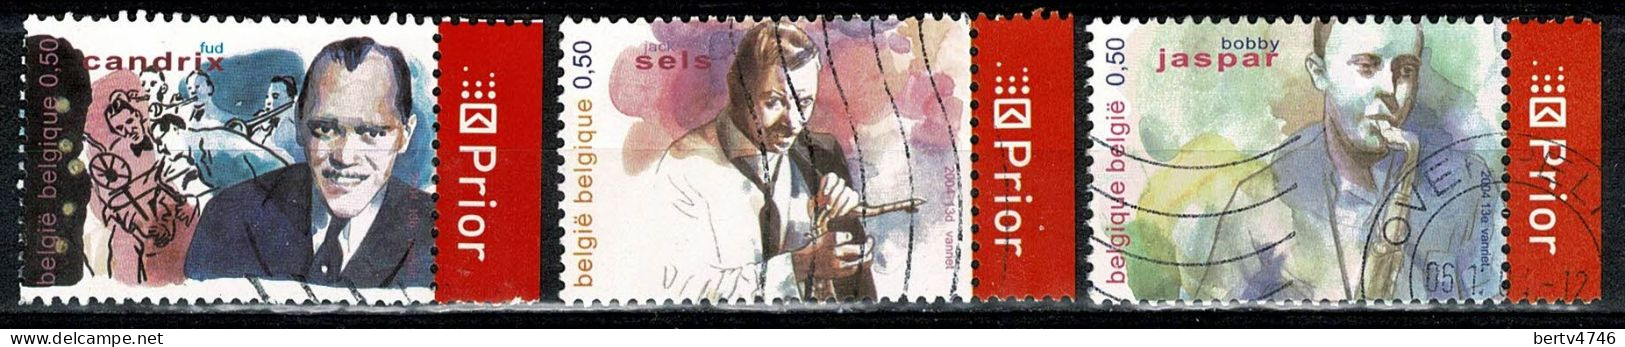 Belg. 2004 - 3284, 3287, 3288, Yv 3271, 3274, 3275, Mi 3333, 3336, 3337 - Used Stamps